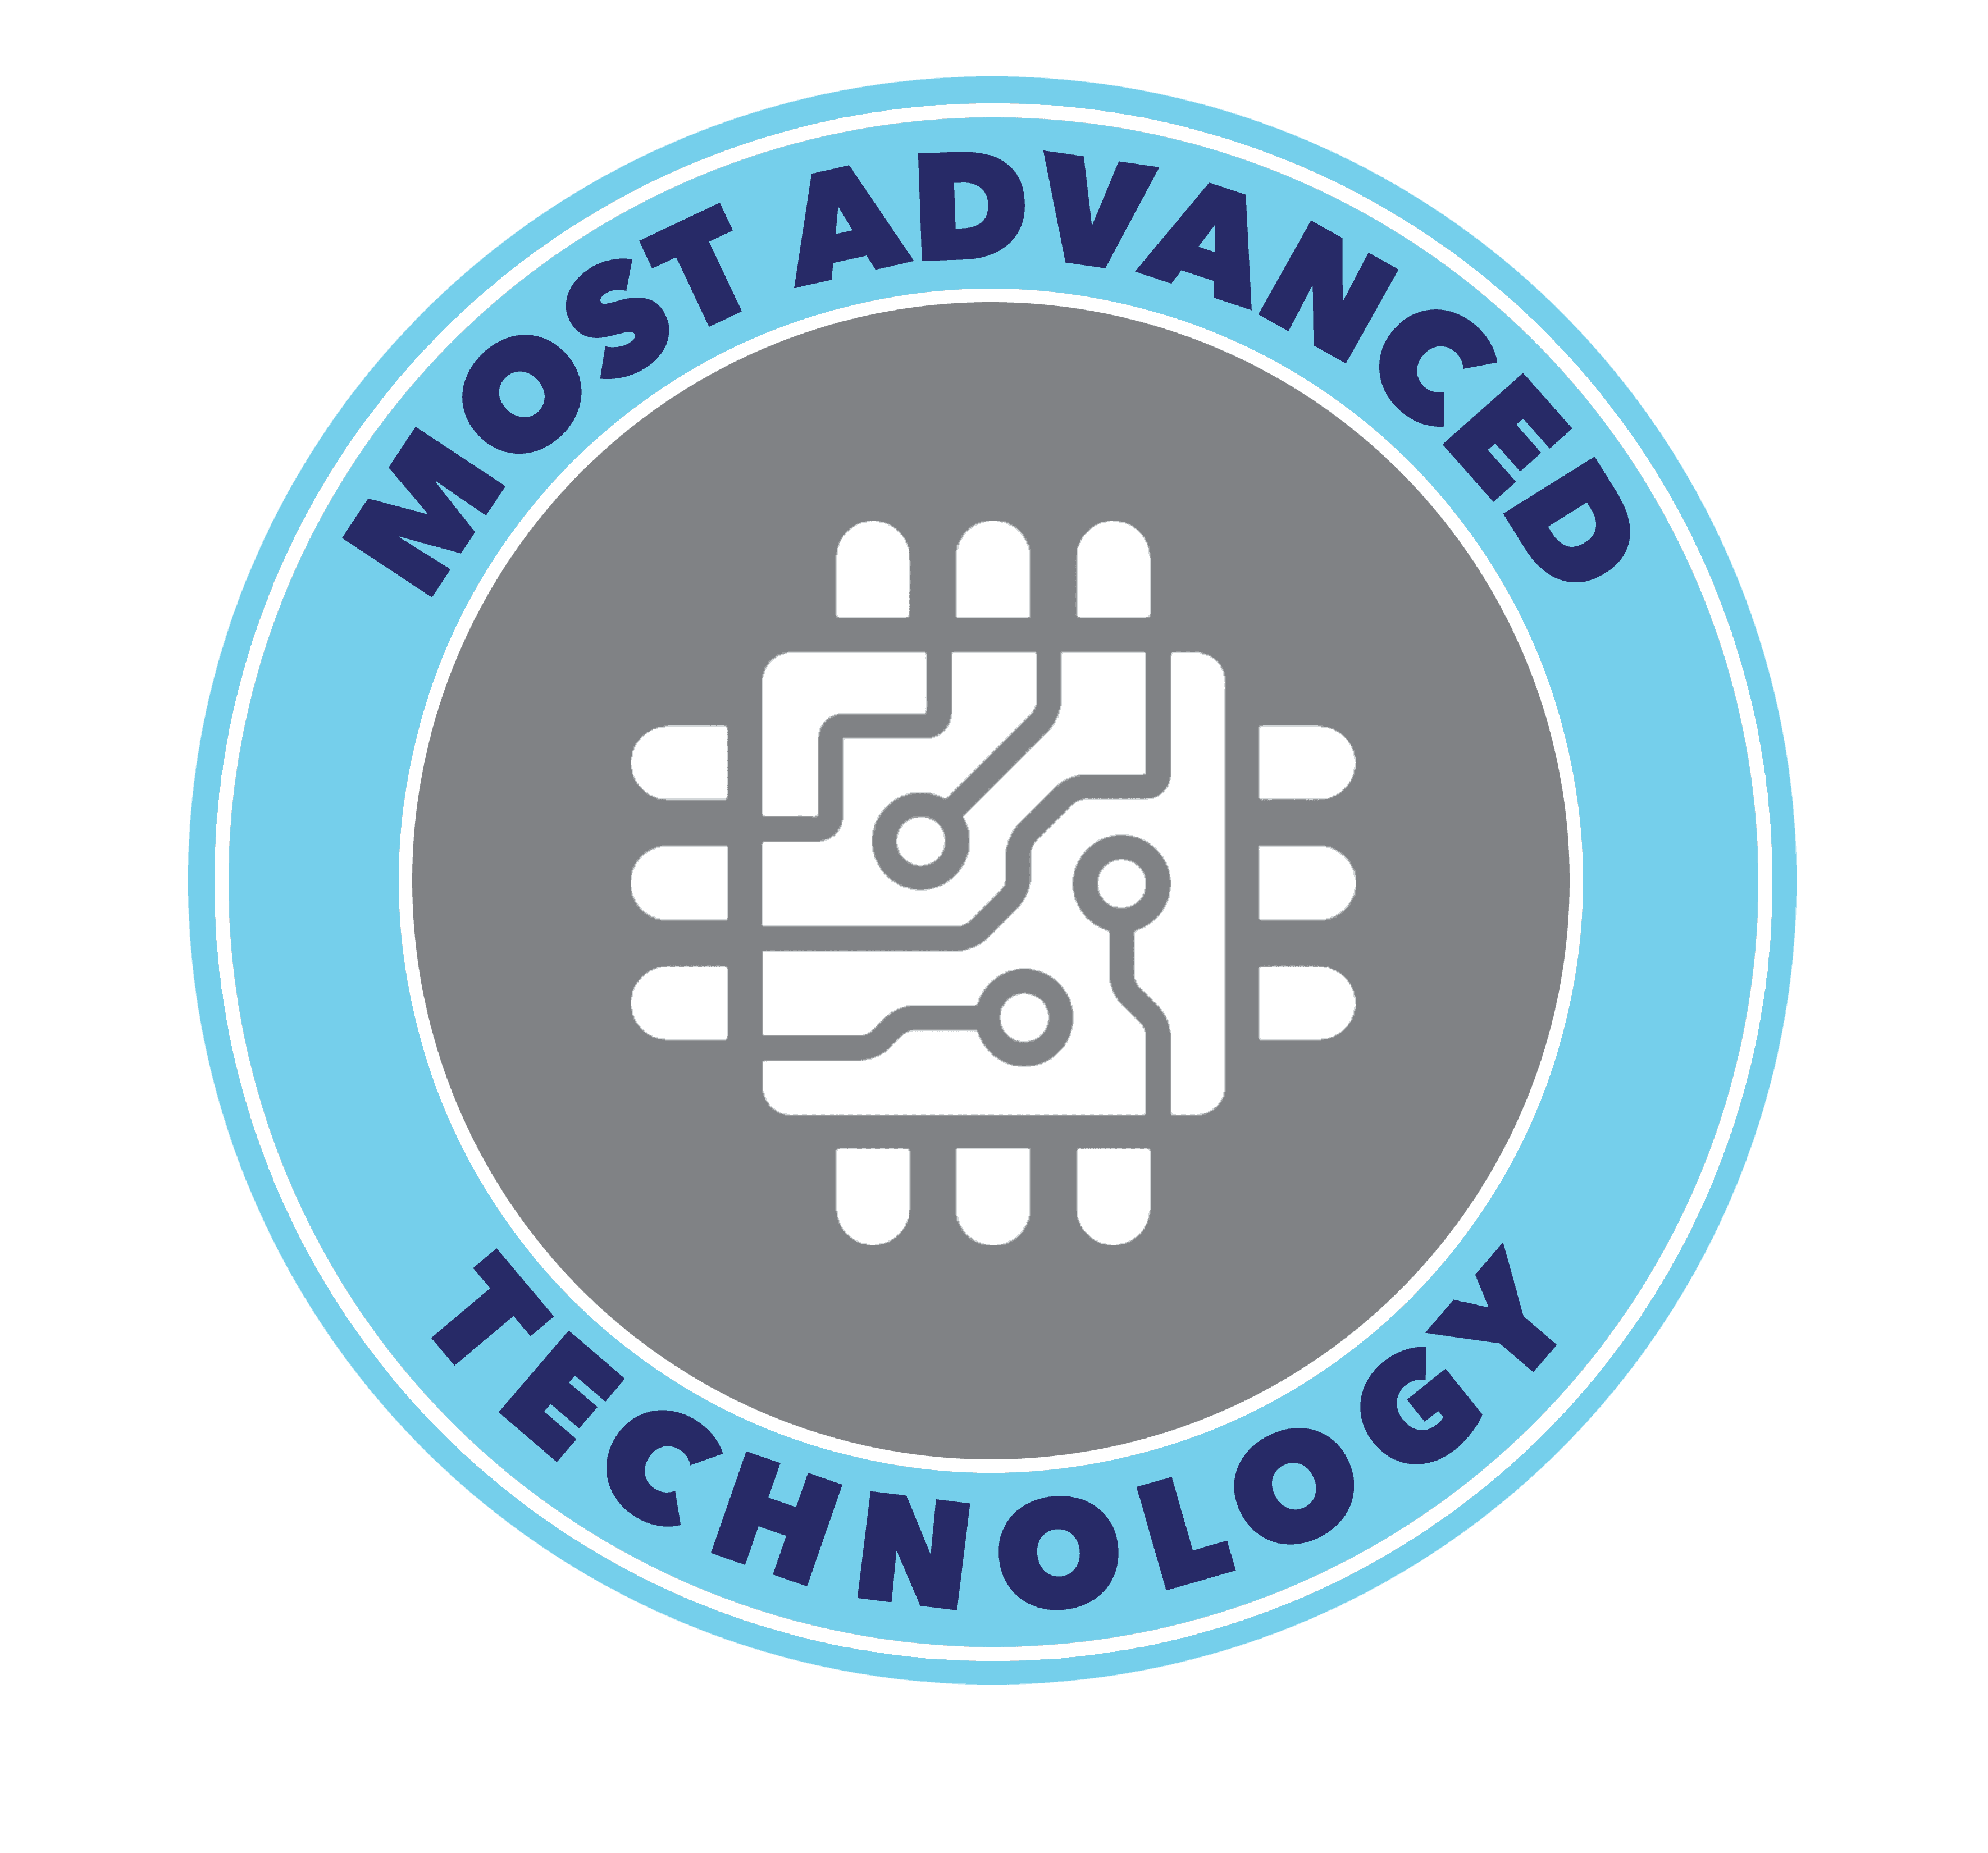 Most Advanced Technology